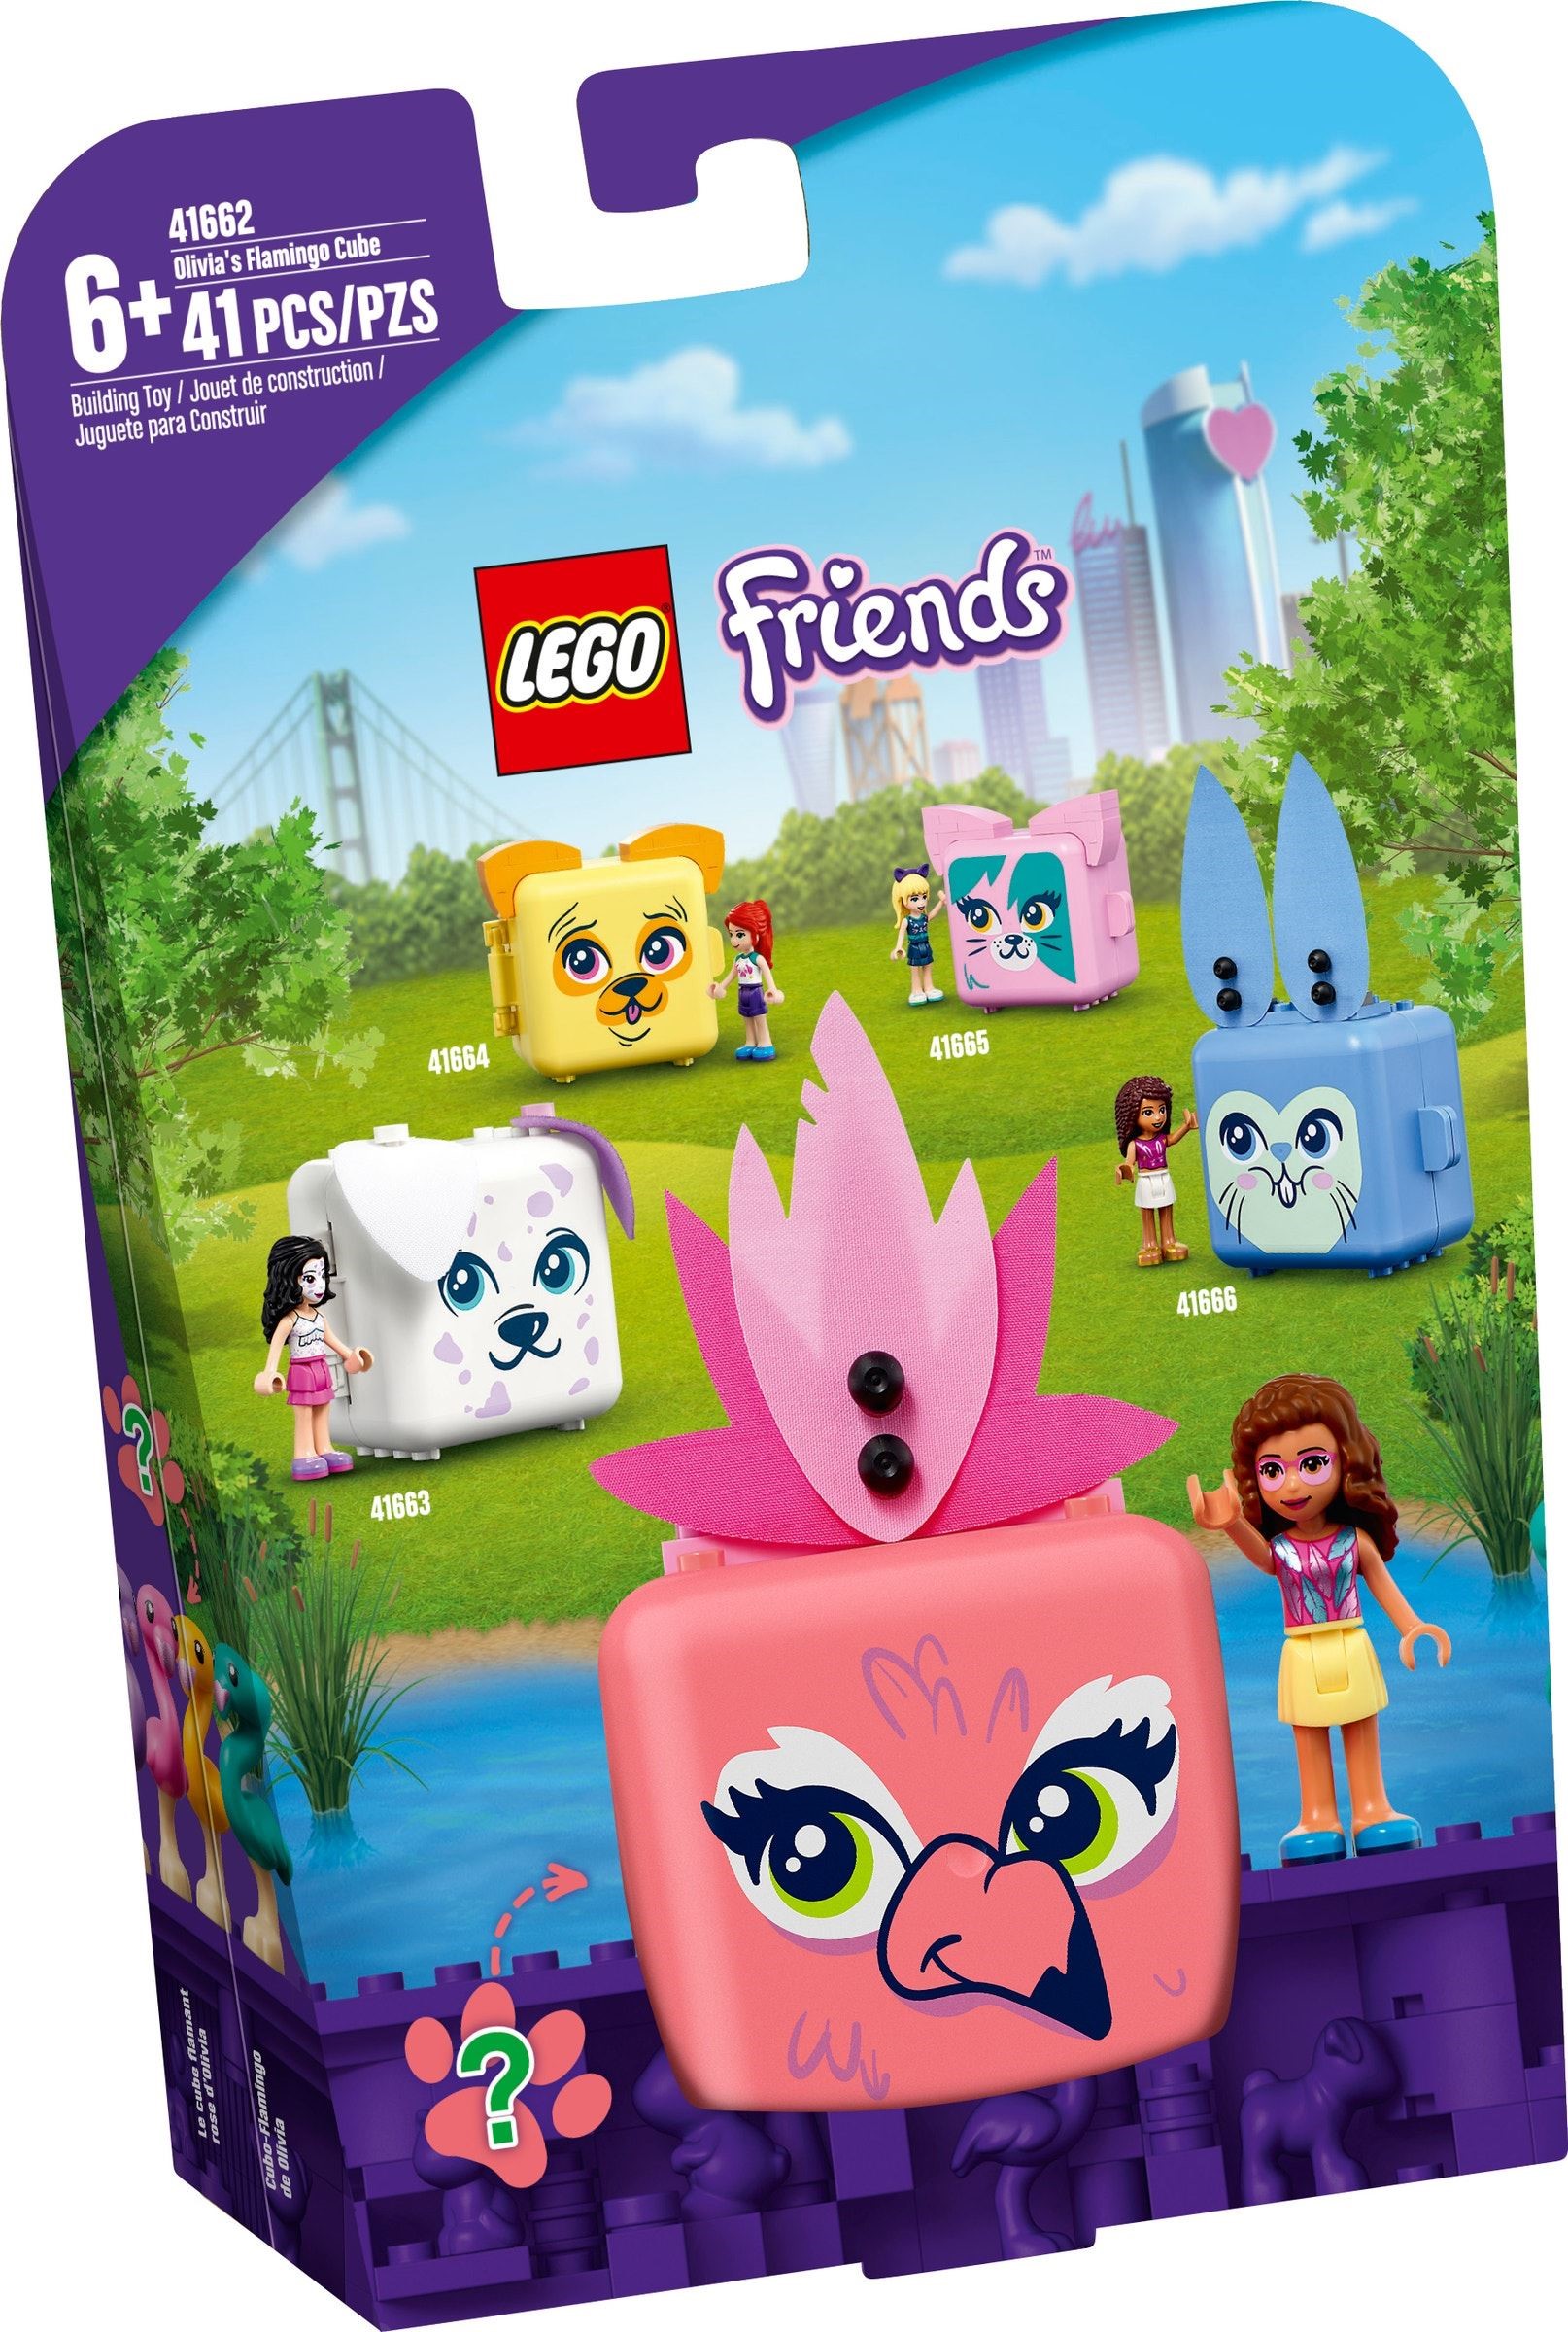 LEGO Friends - Olivia's Flamingo Cube (41662)